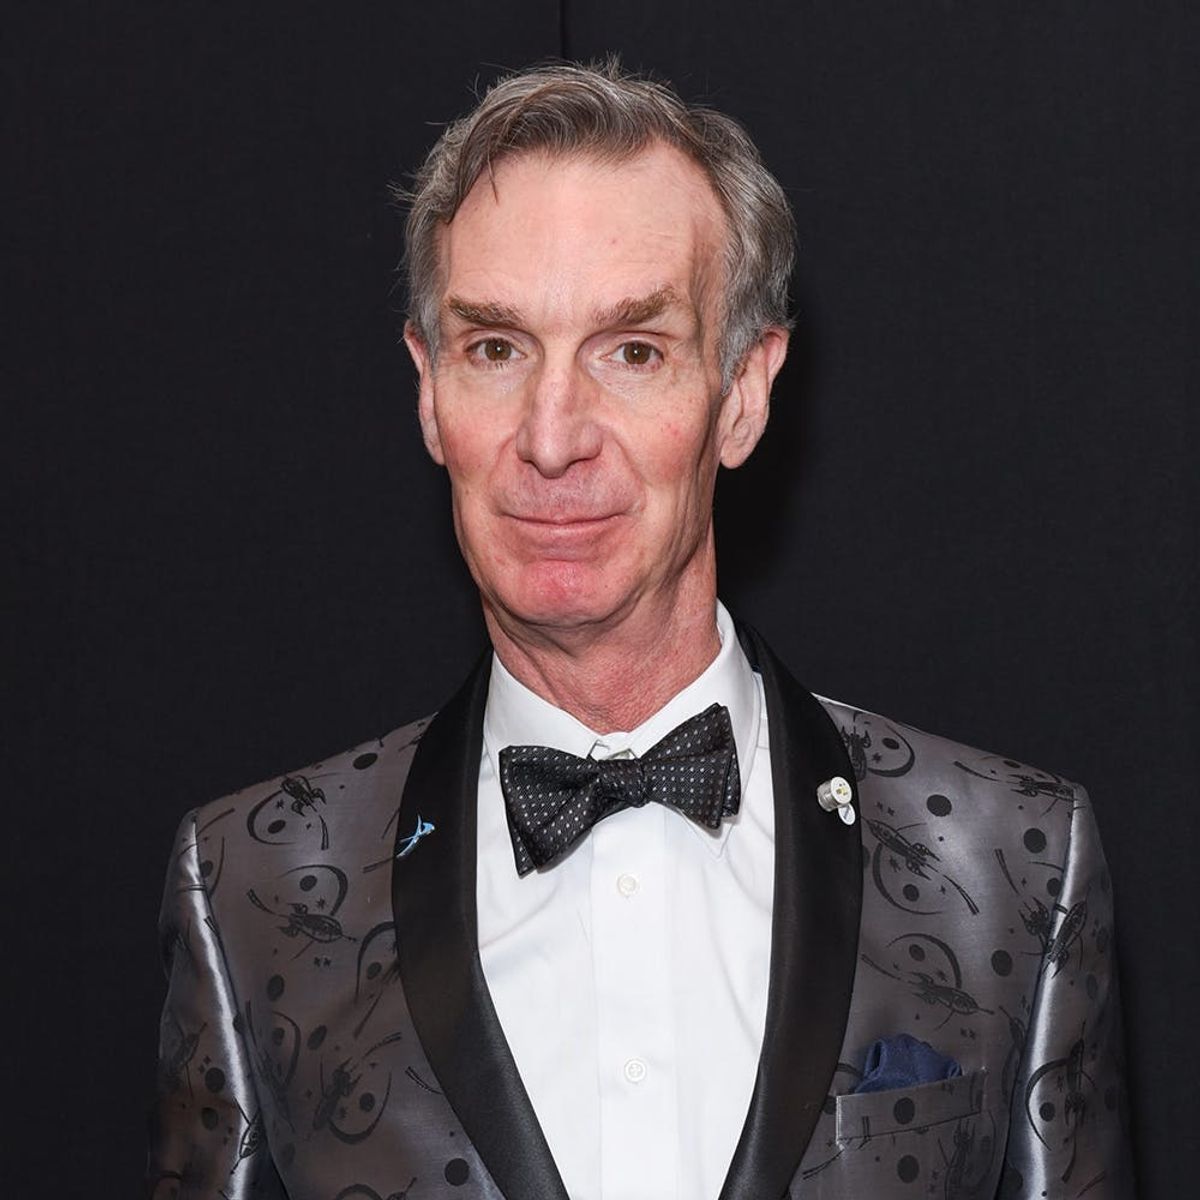 Bill Nye the Science Guy Made His New York Fashion Week Runway Debut